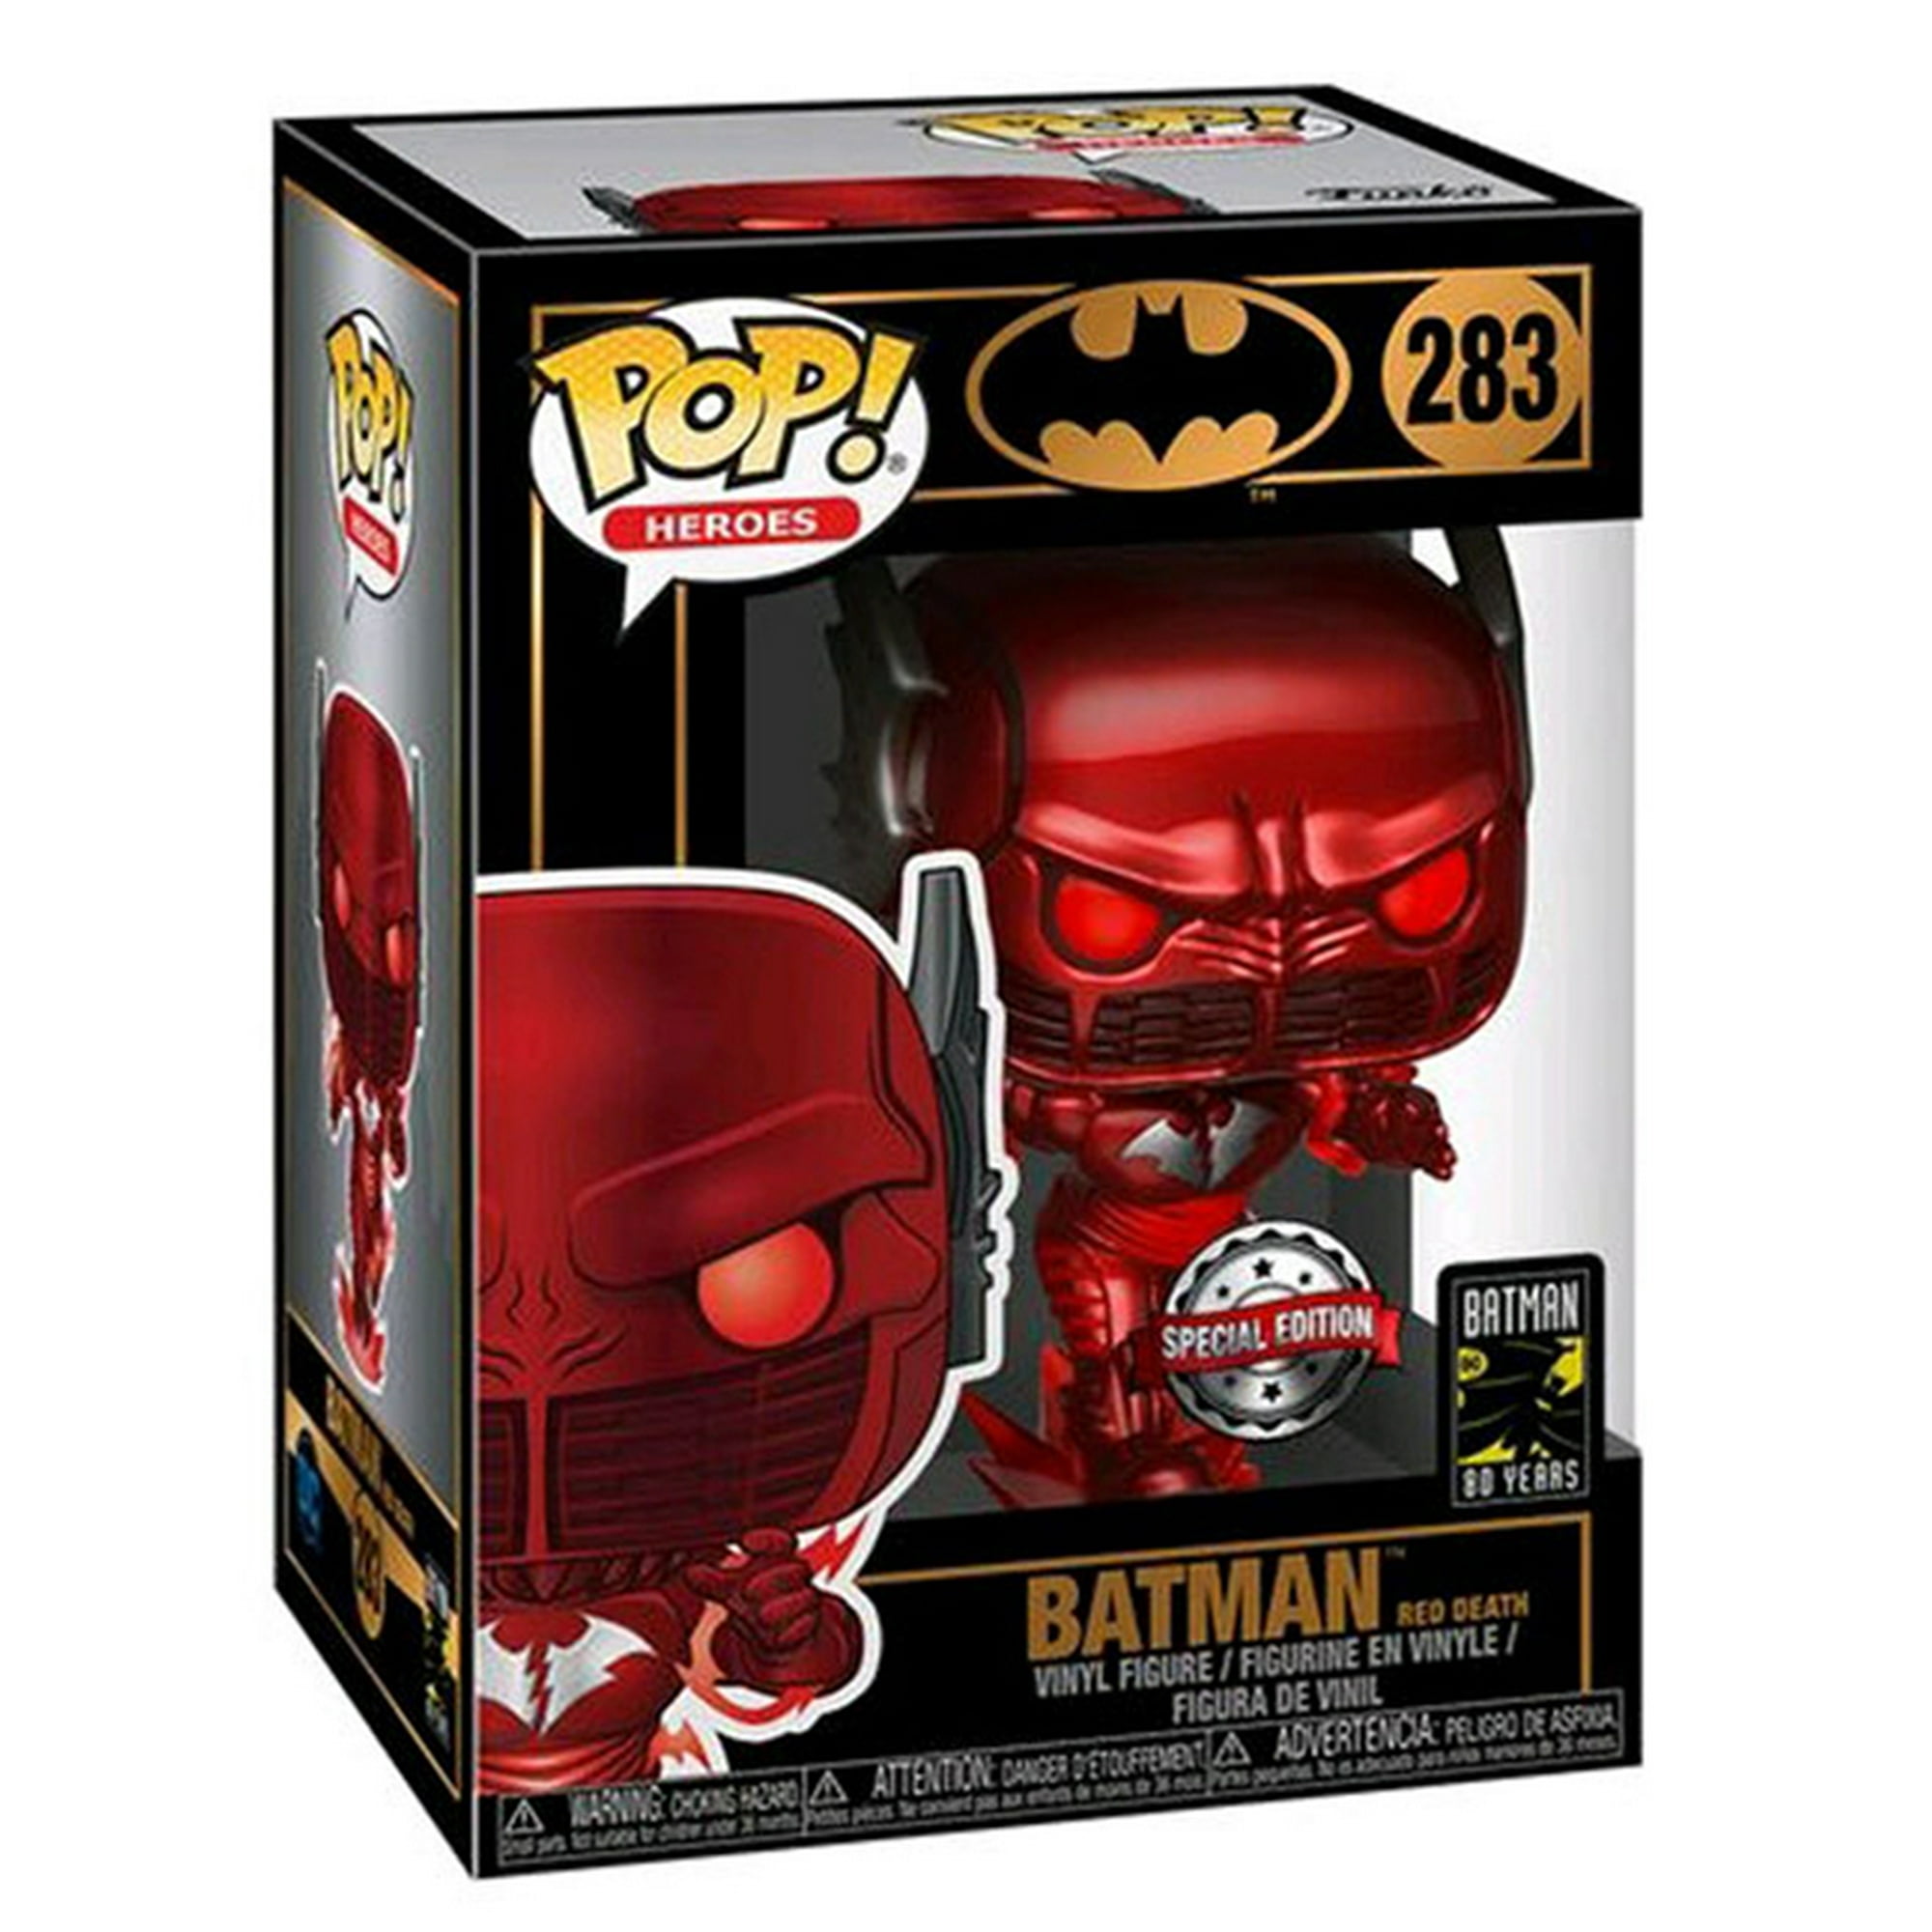 Pop DC Heroes  Inch Statue Figure Batman - Red Death Batman #283  Exclusive | Walmart Canada